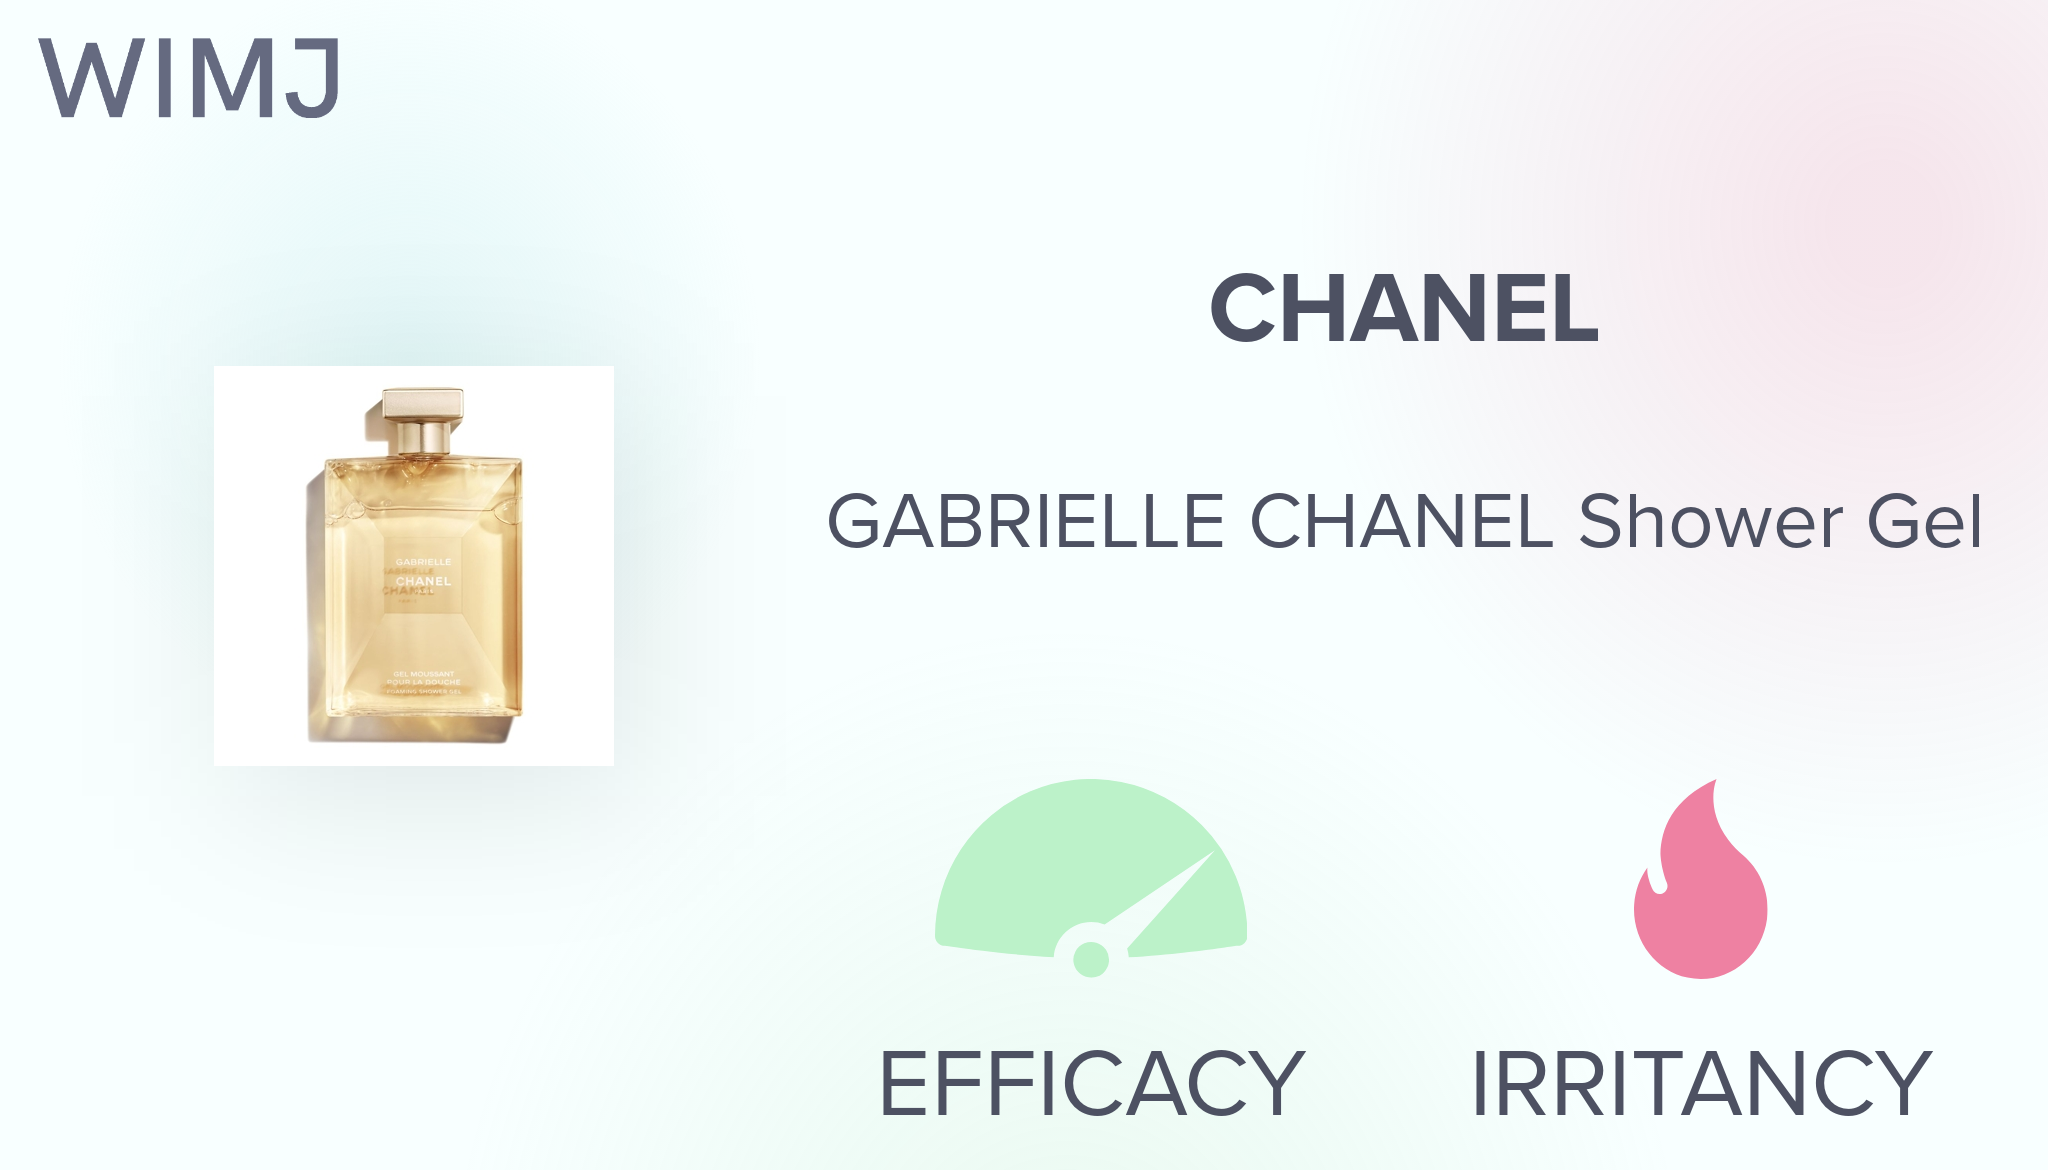 CHANEL GABRIELLE CHANEL Shower Gel on COOLS